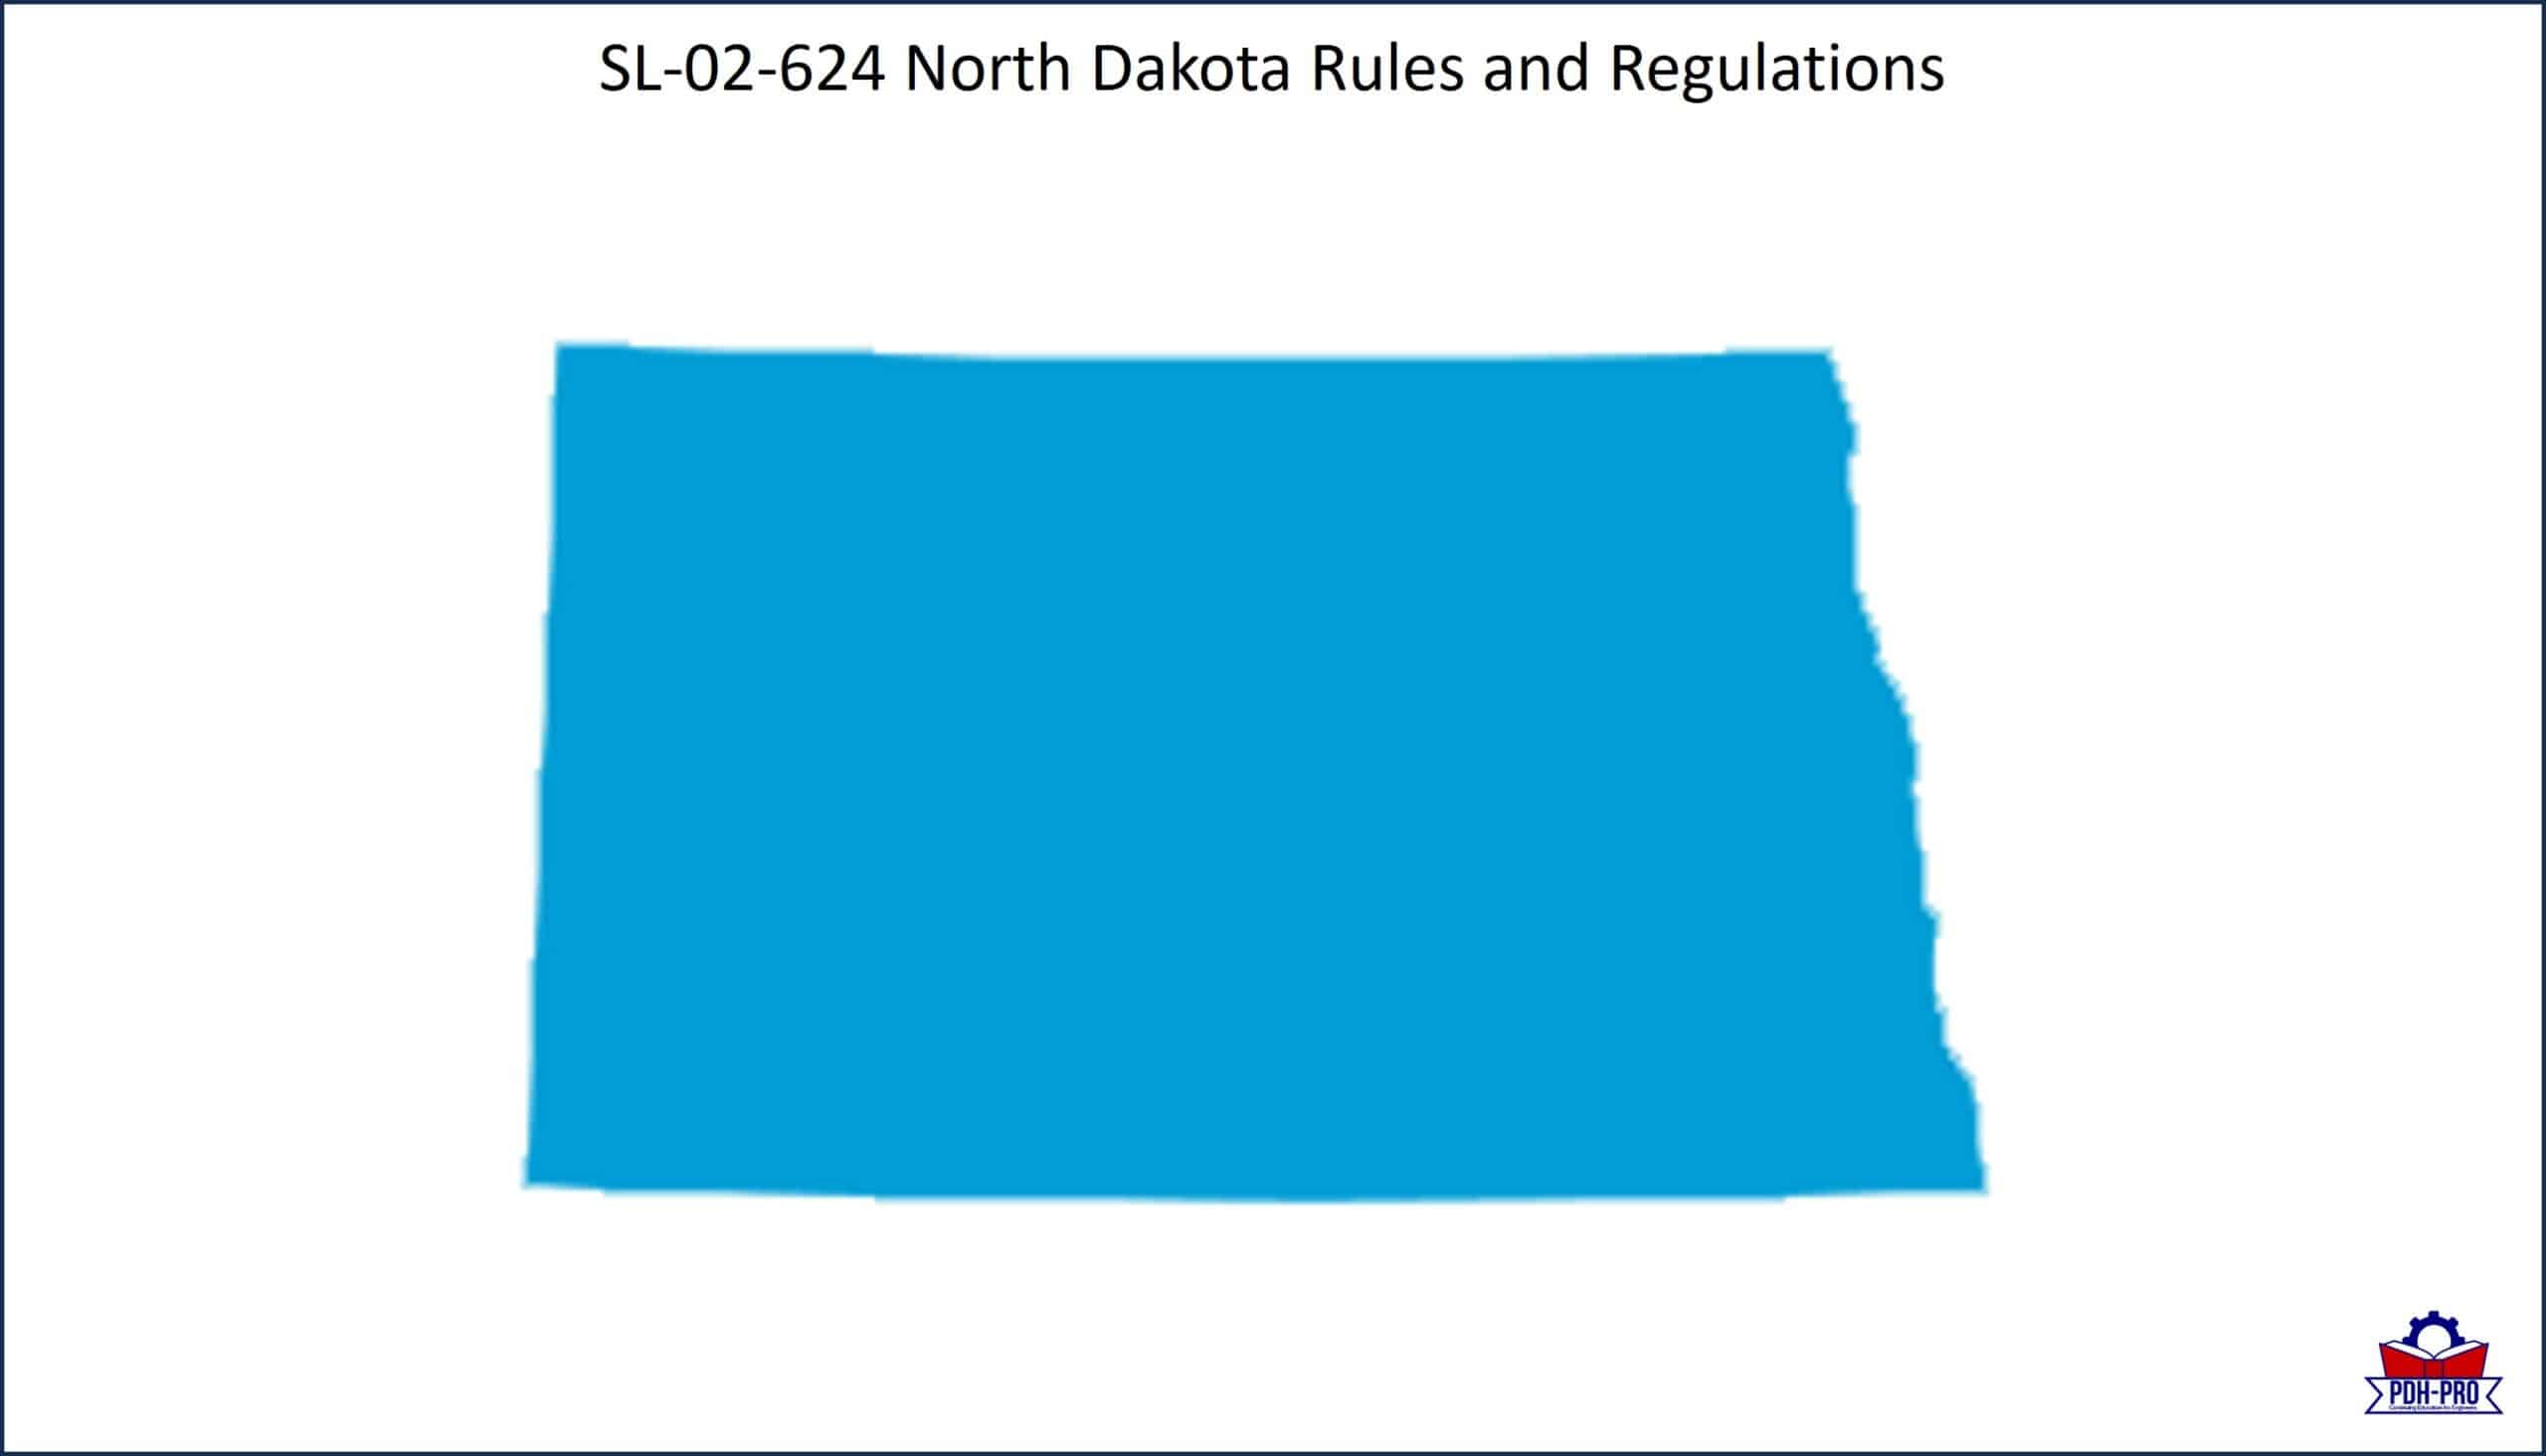 North Dakota Rules and Regulations